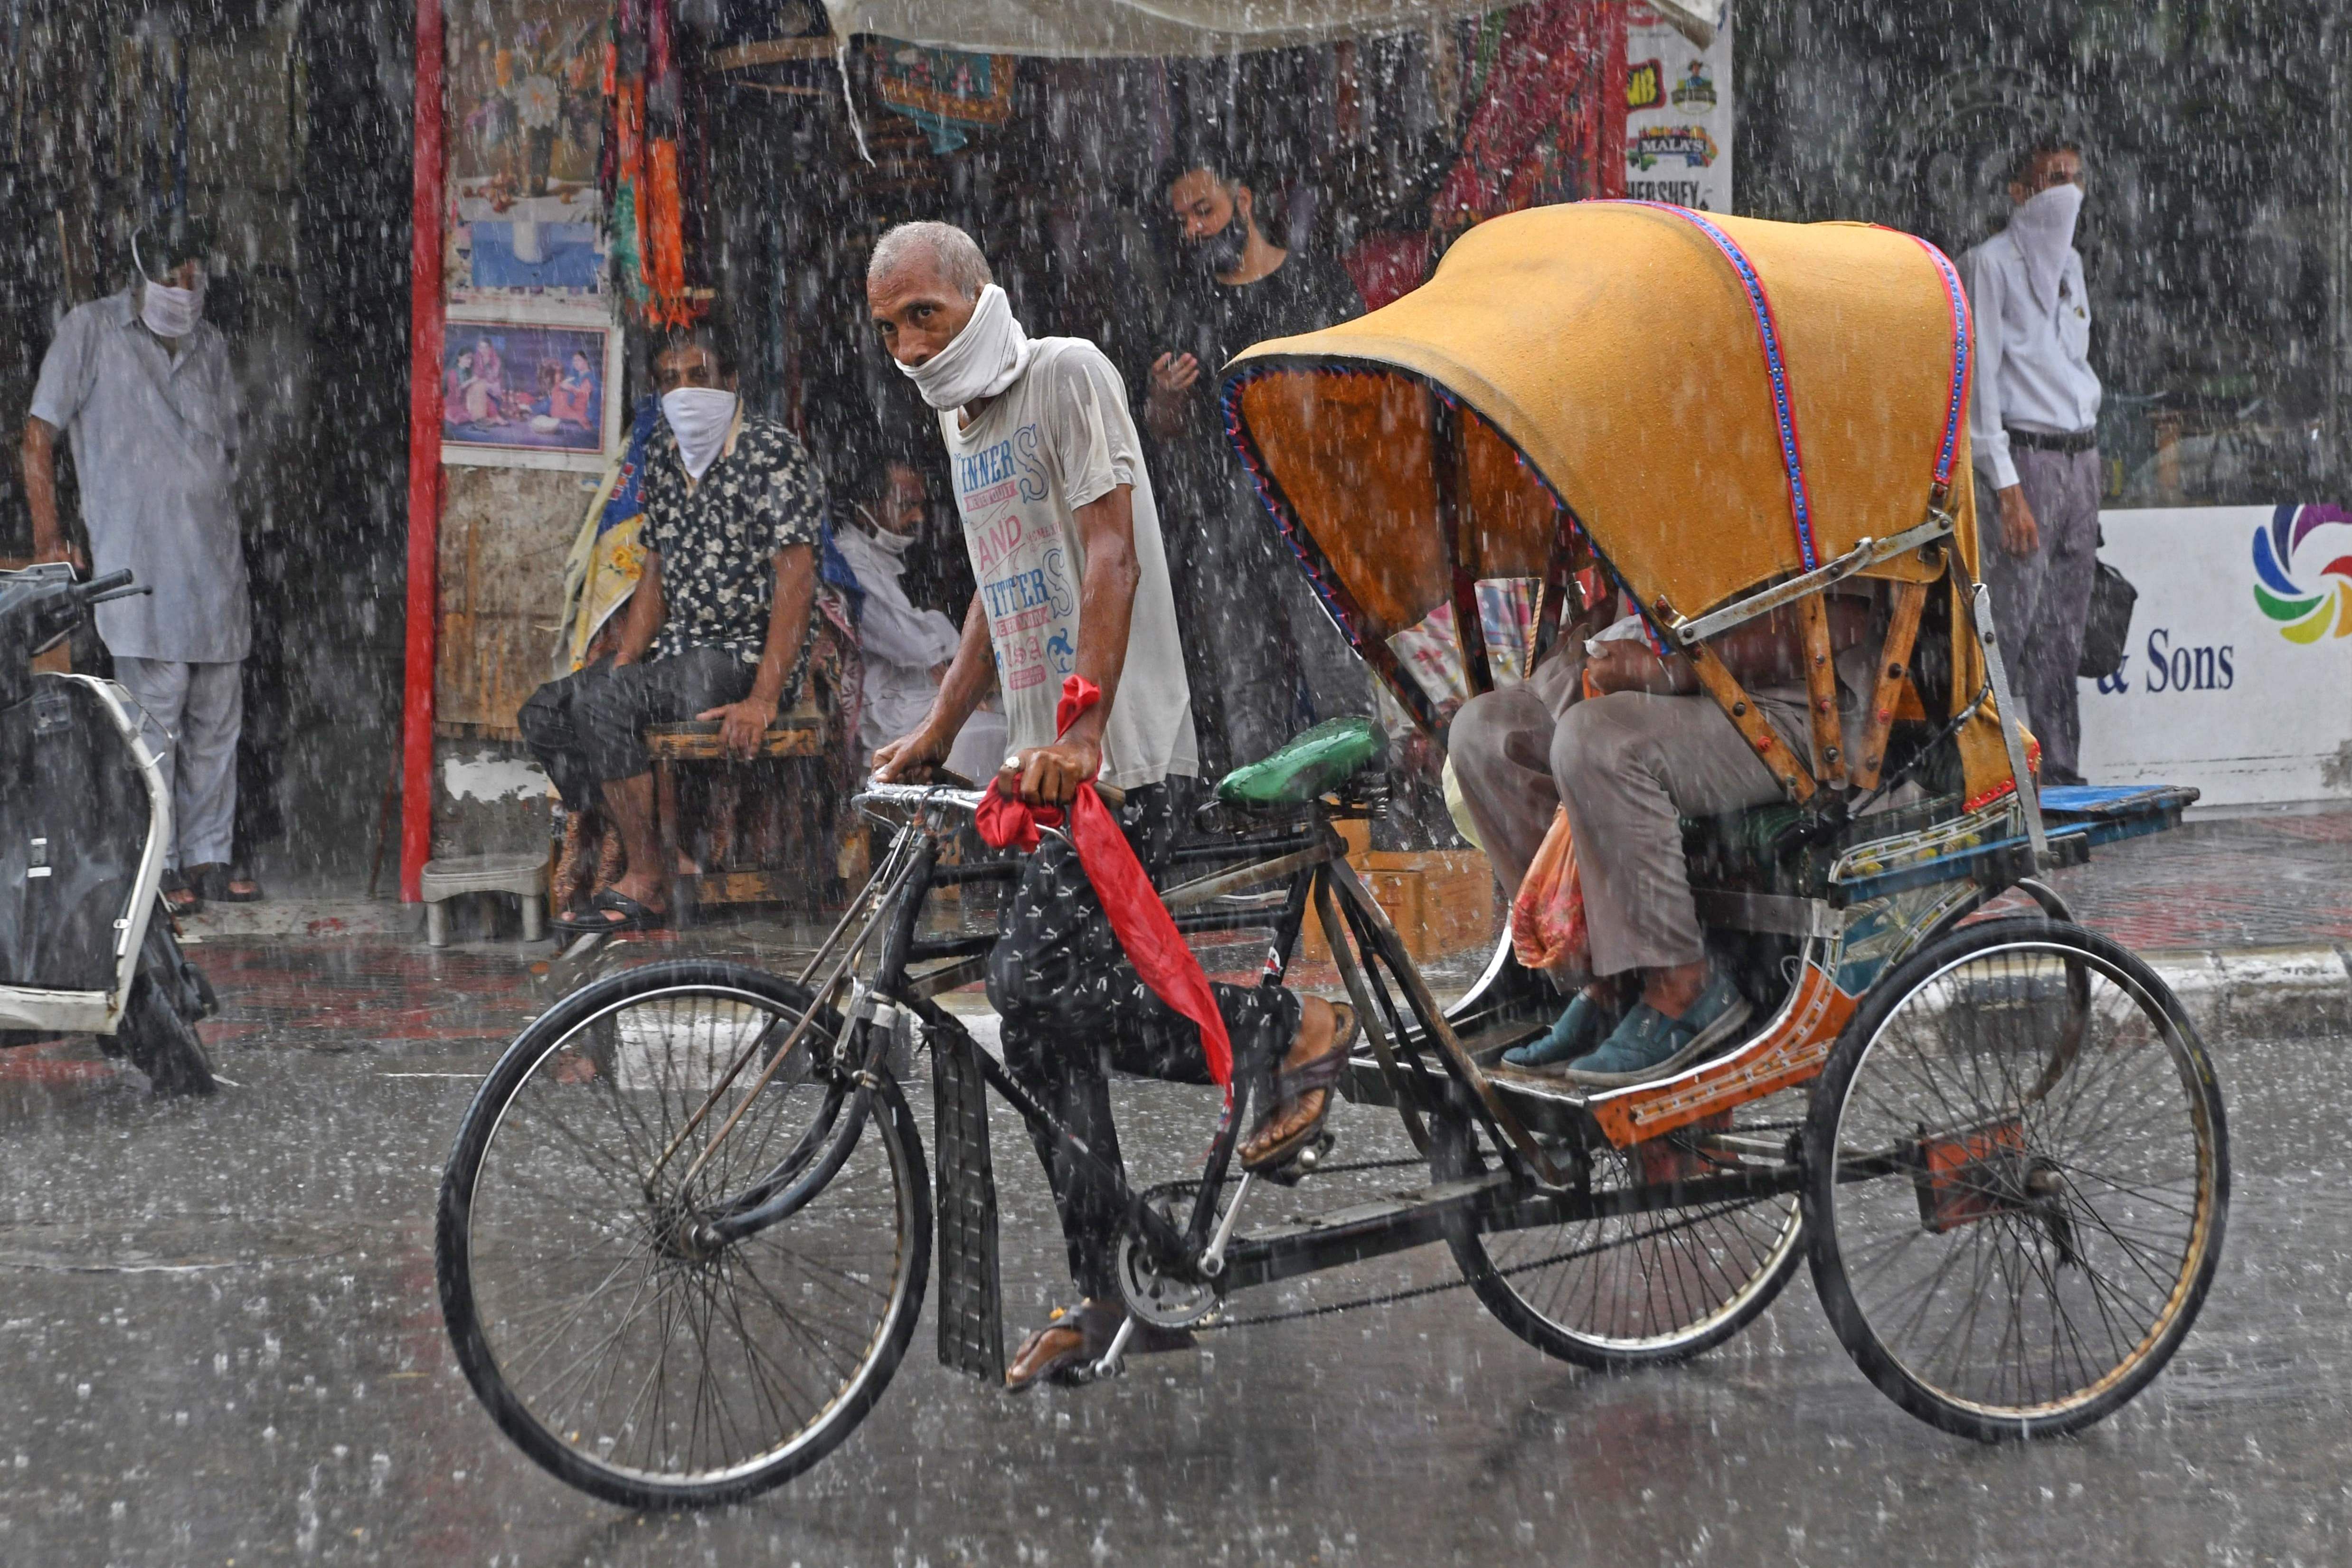 A rickshaw rider makes his way through a heavy rain shower in Amritsar on July 16, 2020. Credit: AFP